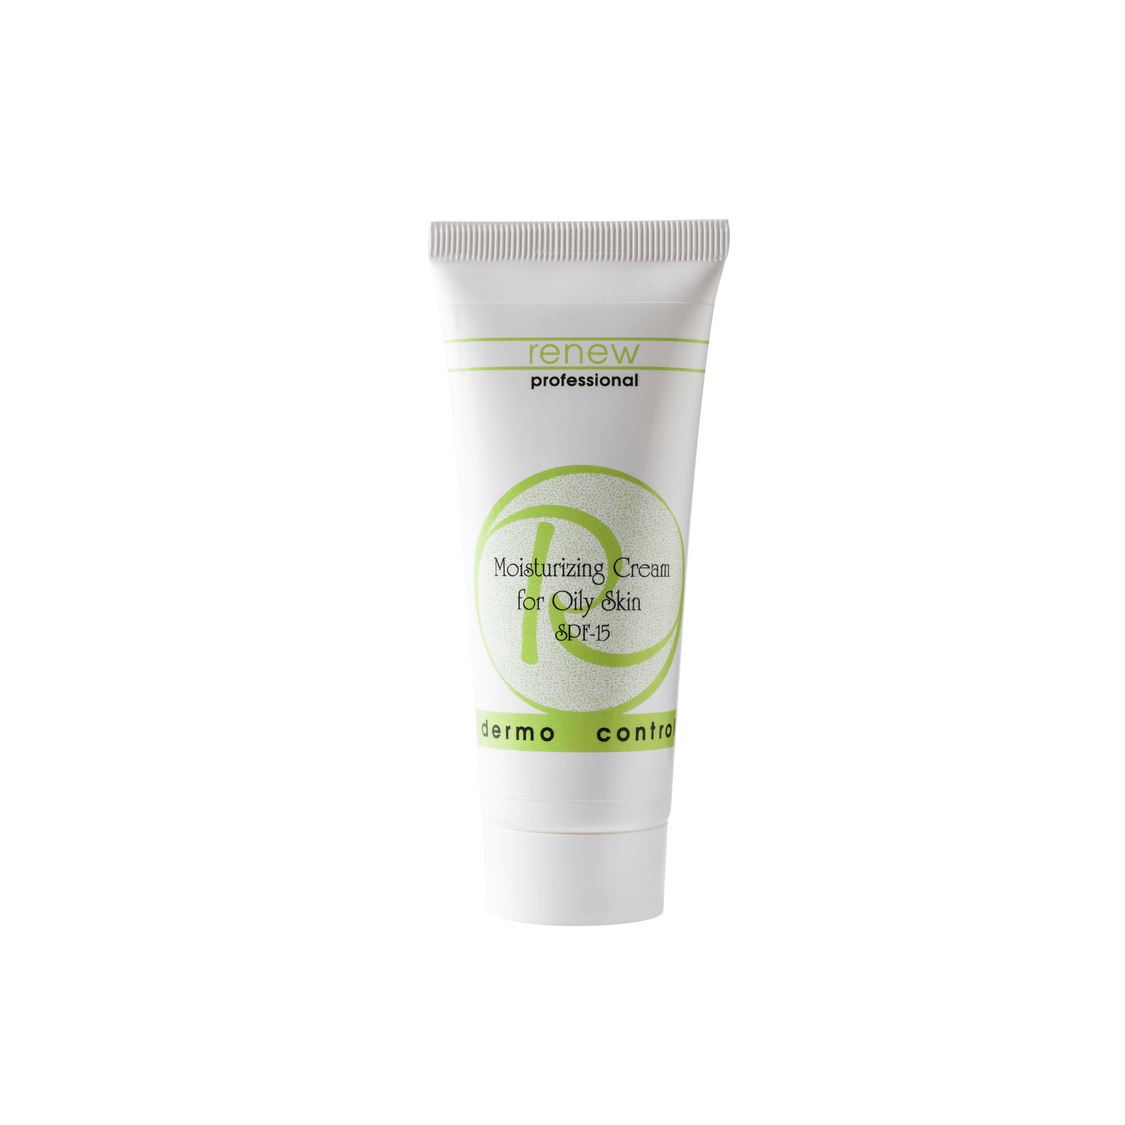 Renew Moisturizing Cream For Oily& Problem Skin SPF-15 | Dermo Control 70ml/2.4FL.OZ. - Yofeely Cosmetics